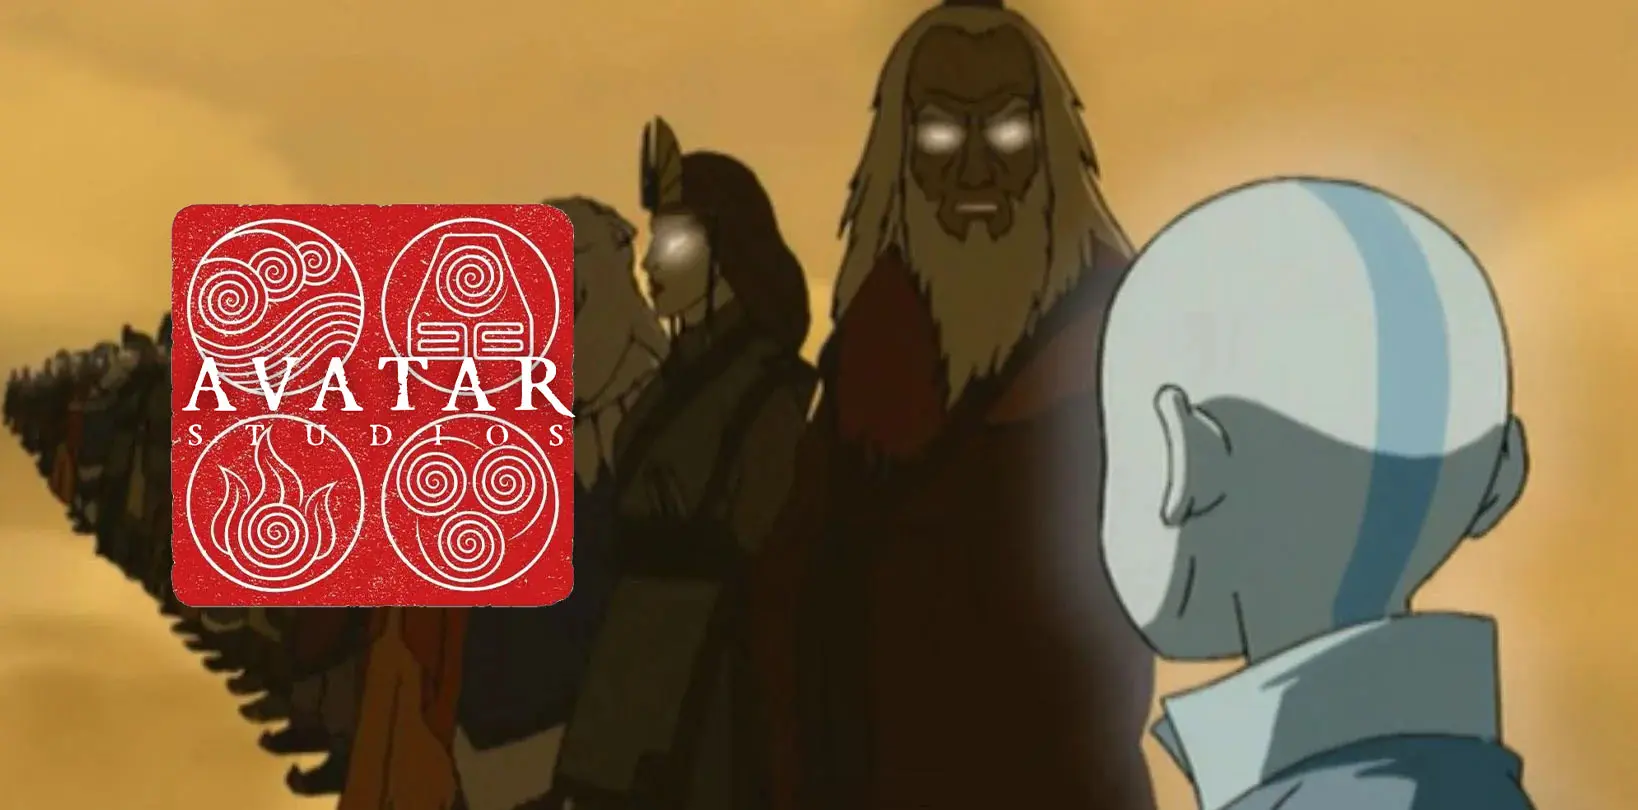 Avatar The Last Airbender is on Netflix